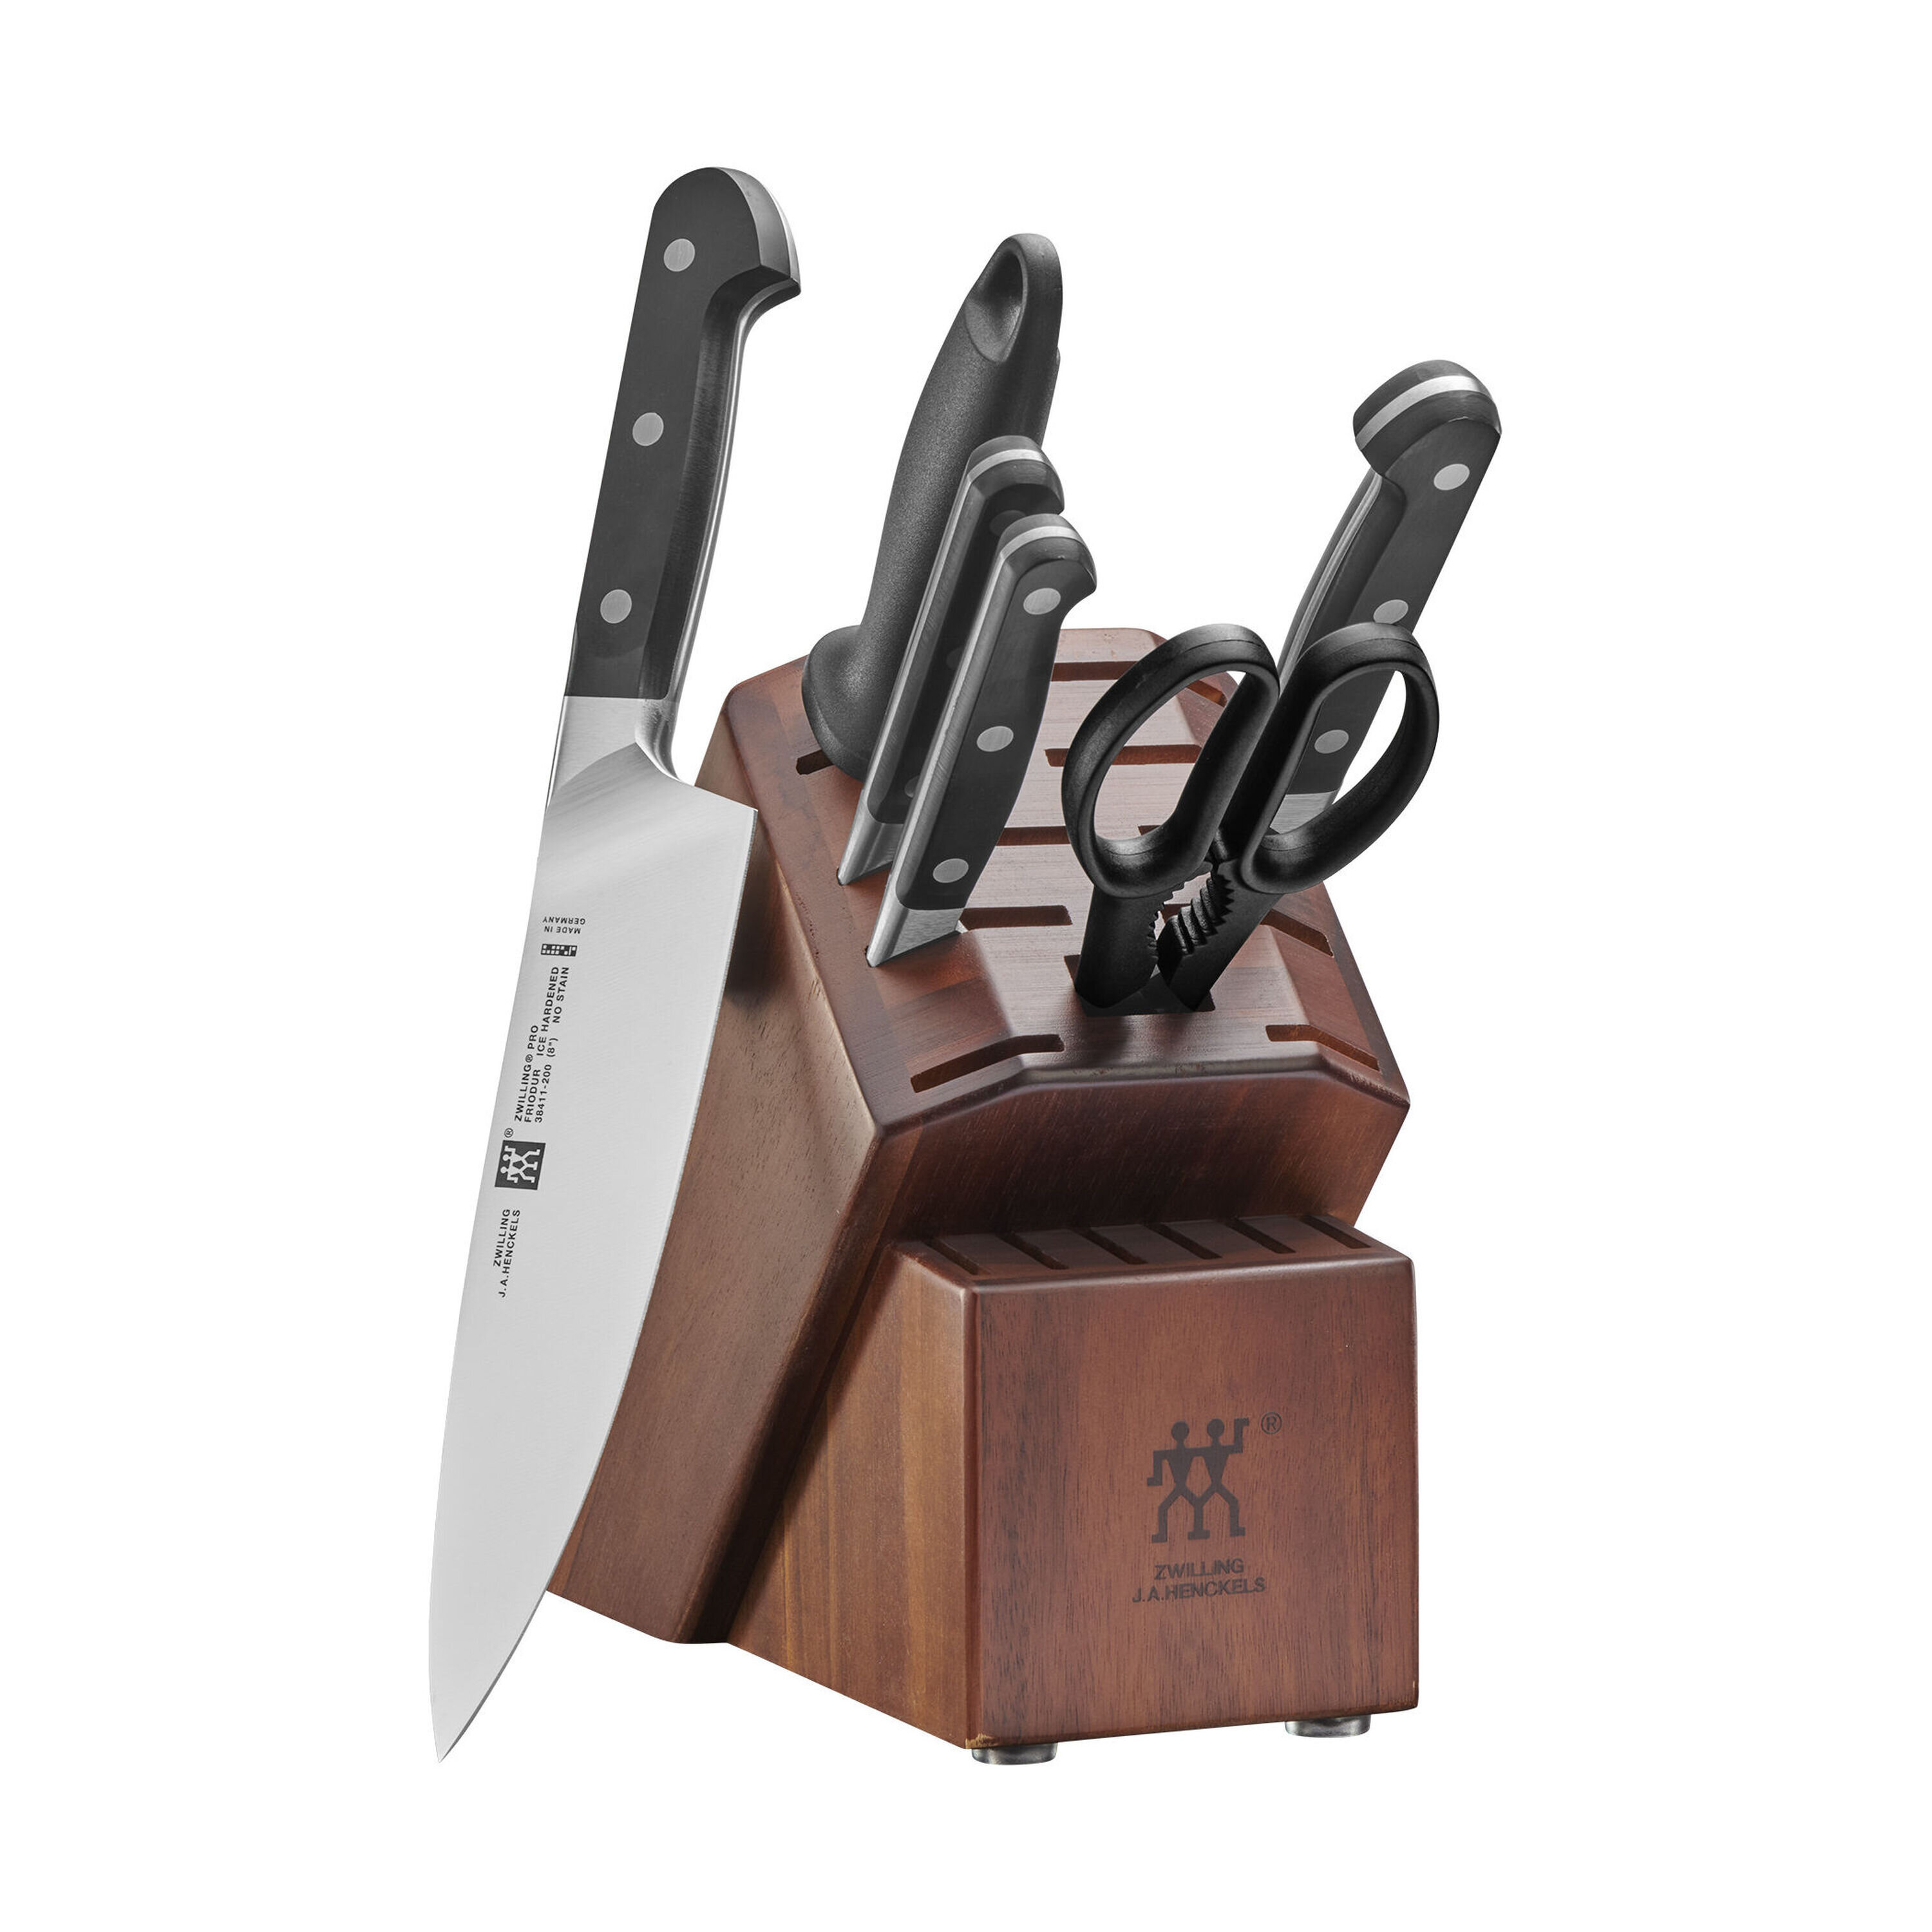 Wayfair sale: Get the Henckels Modernist 13-Piece Knife Block Set